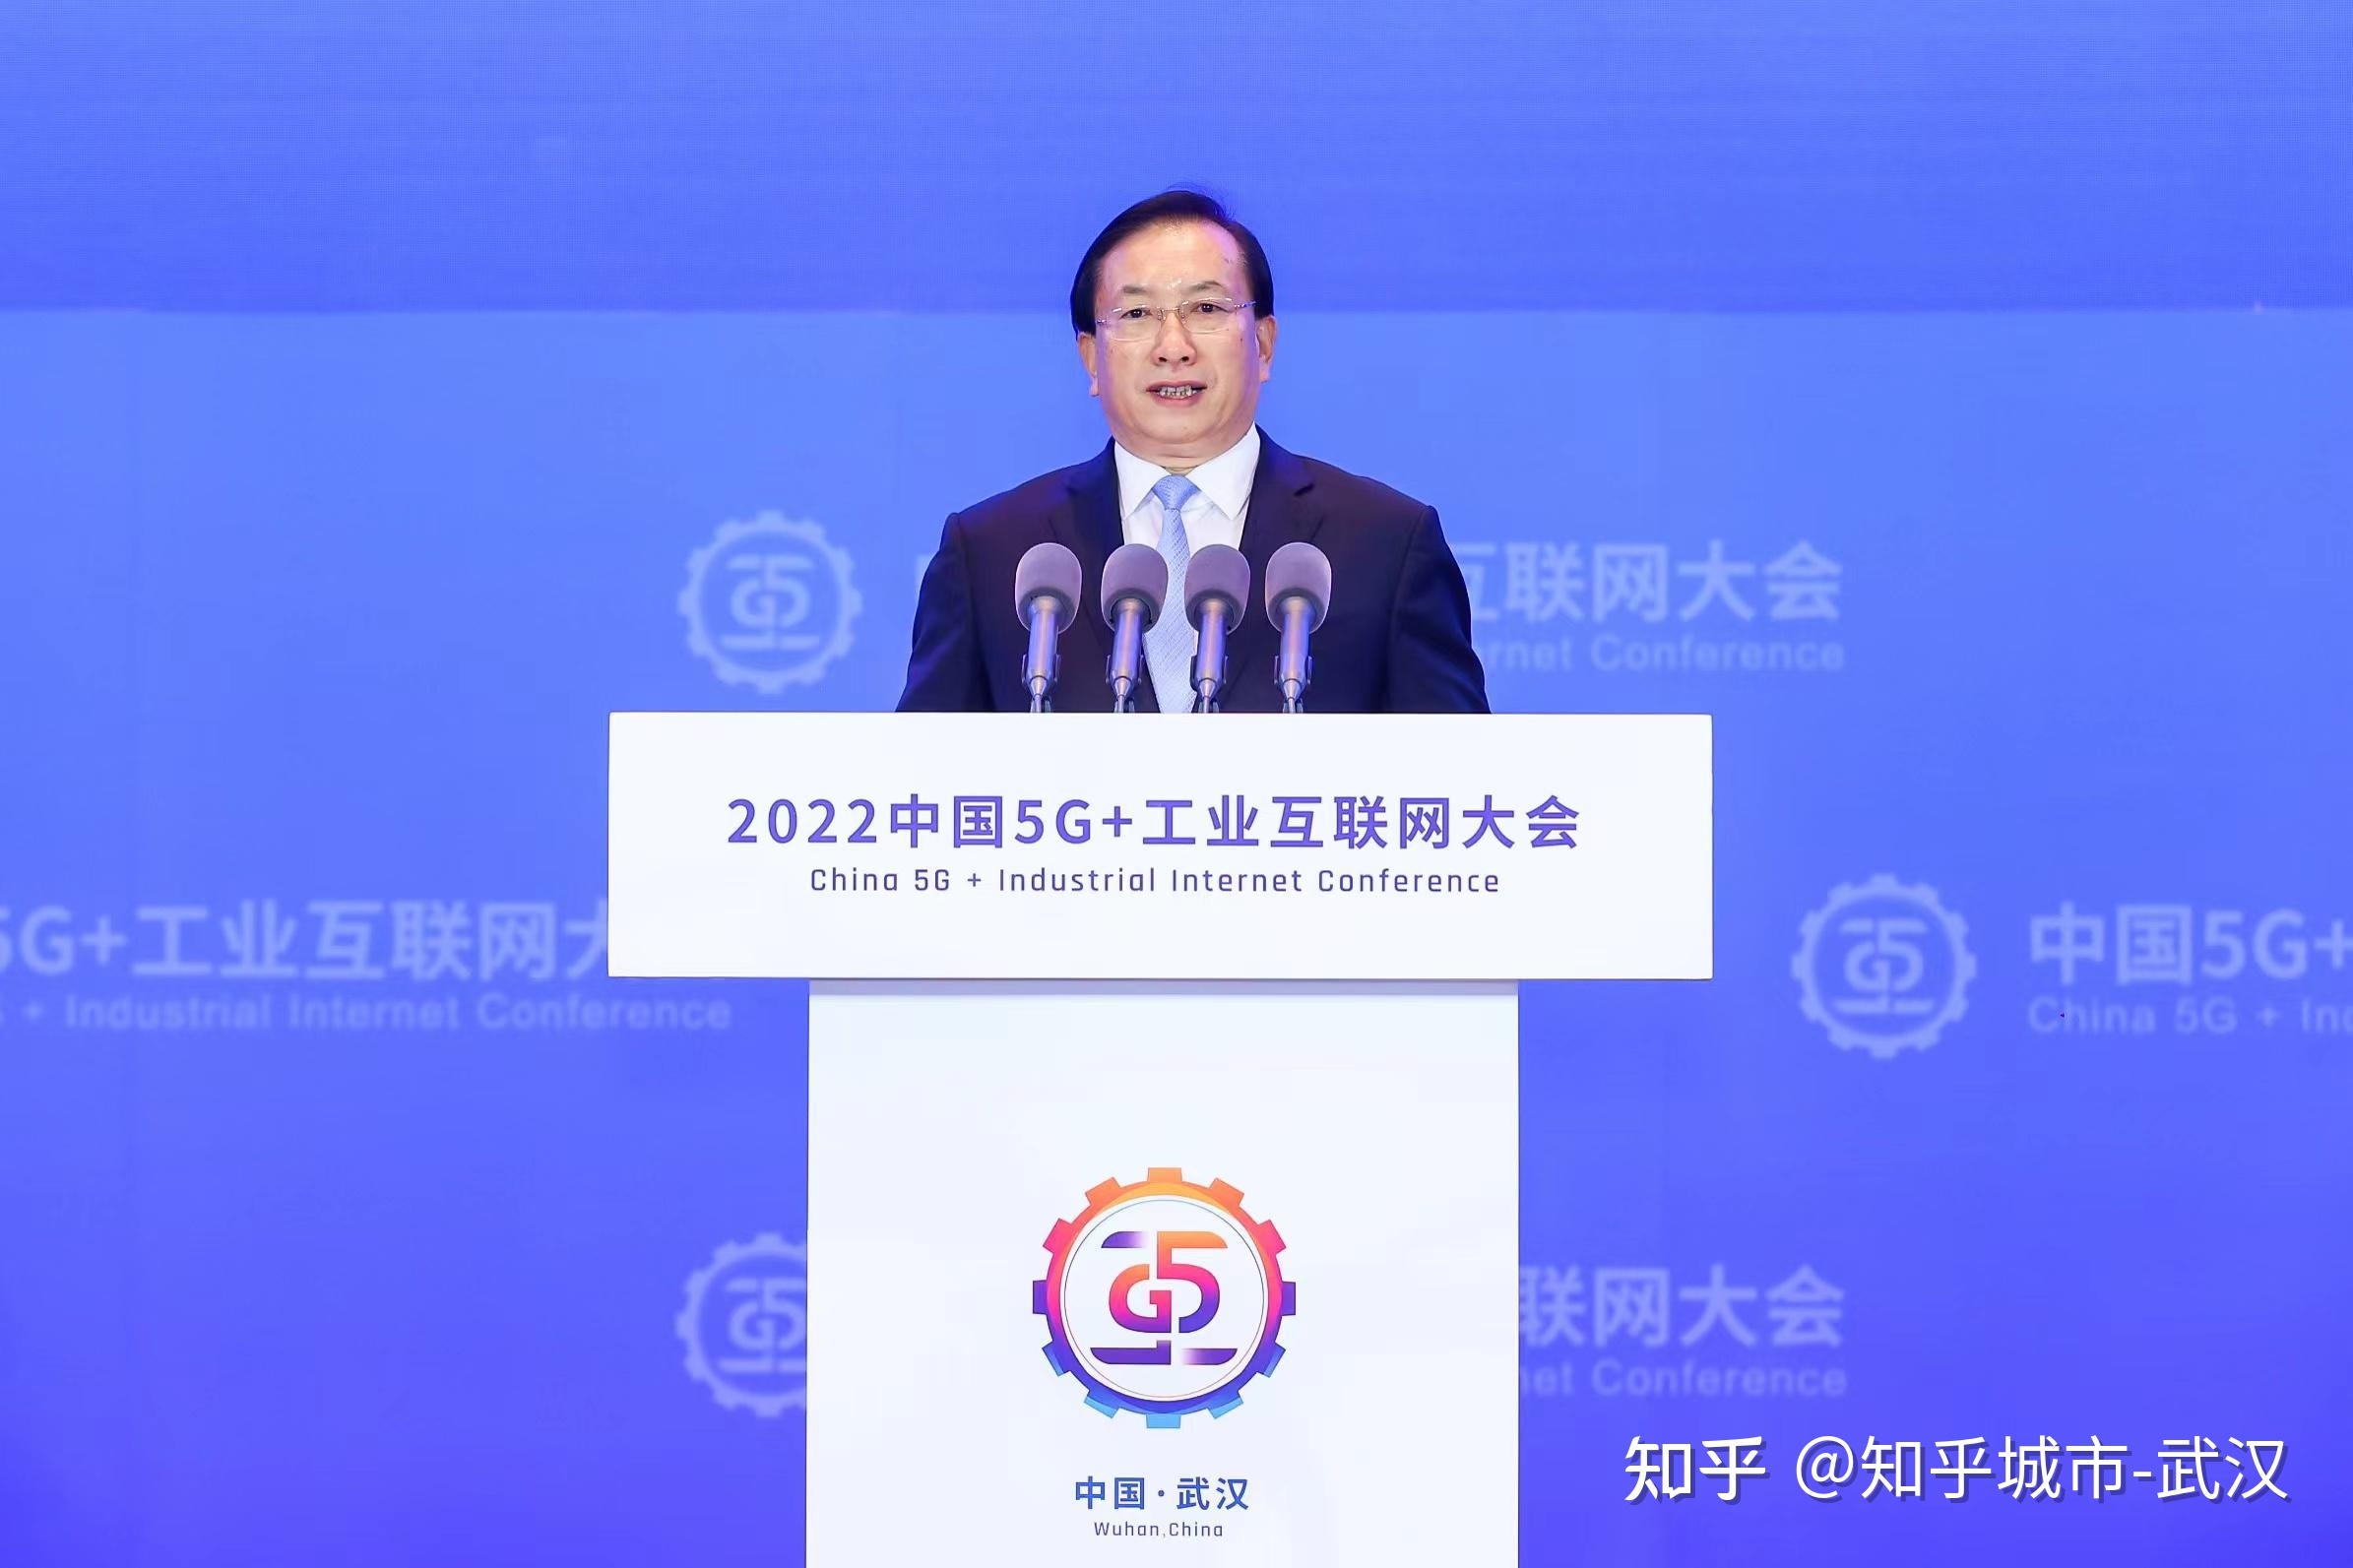 5G + 工业互联网迎来湖北时间，王忠林称将为数字中国做贡献-1.jpg